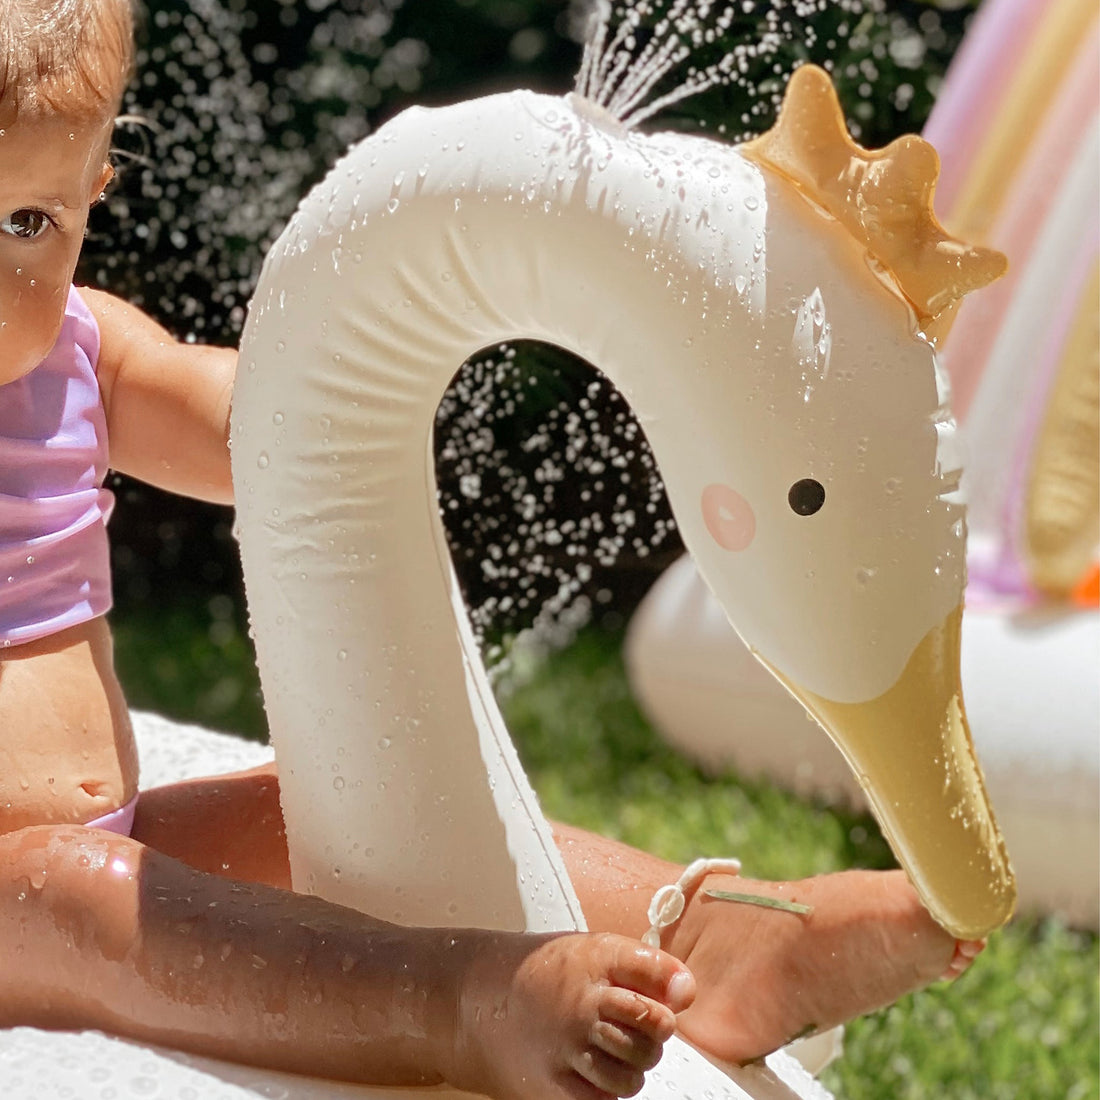 sunnylife-inflatable-sprinkler-princess-swan-multi-sunl-s41isswn